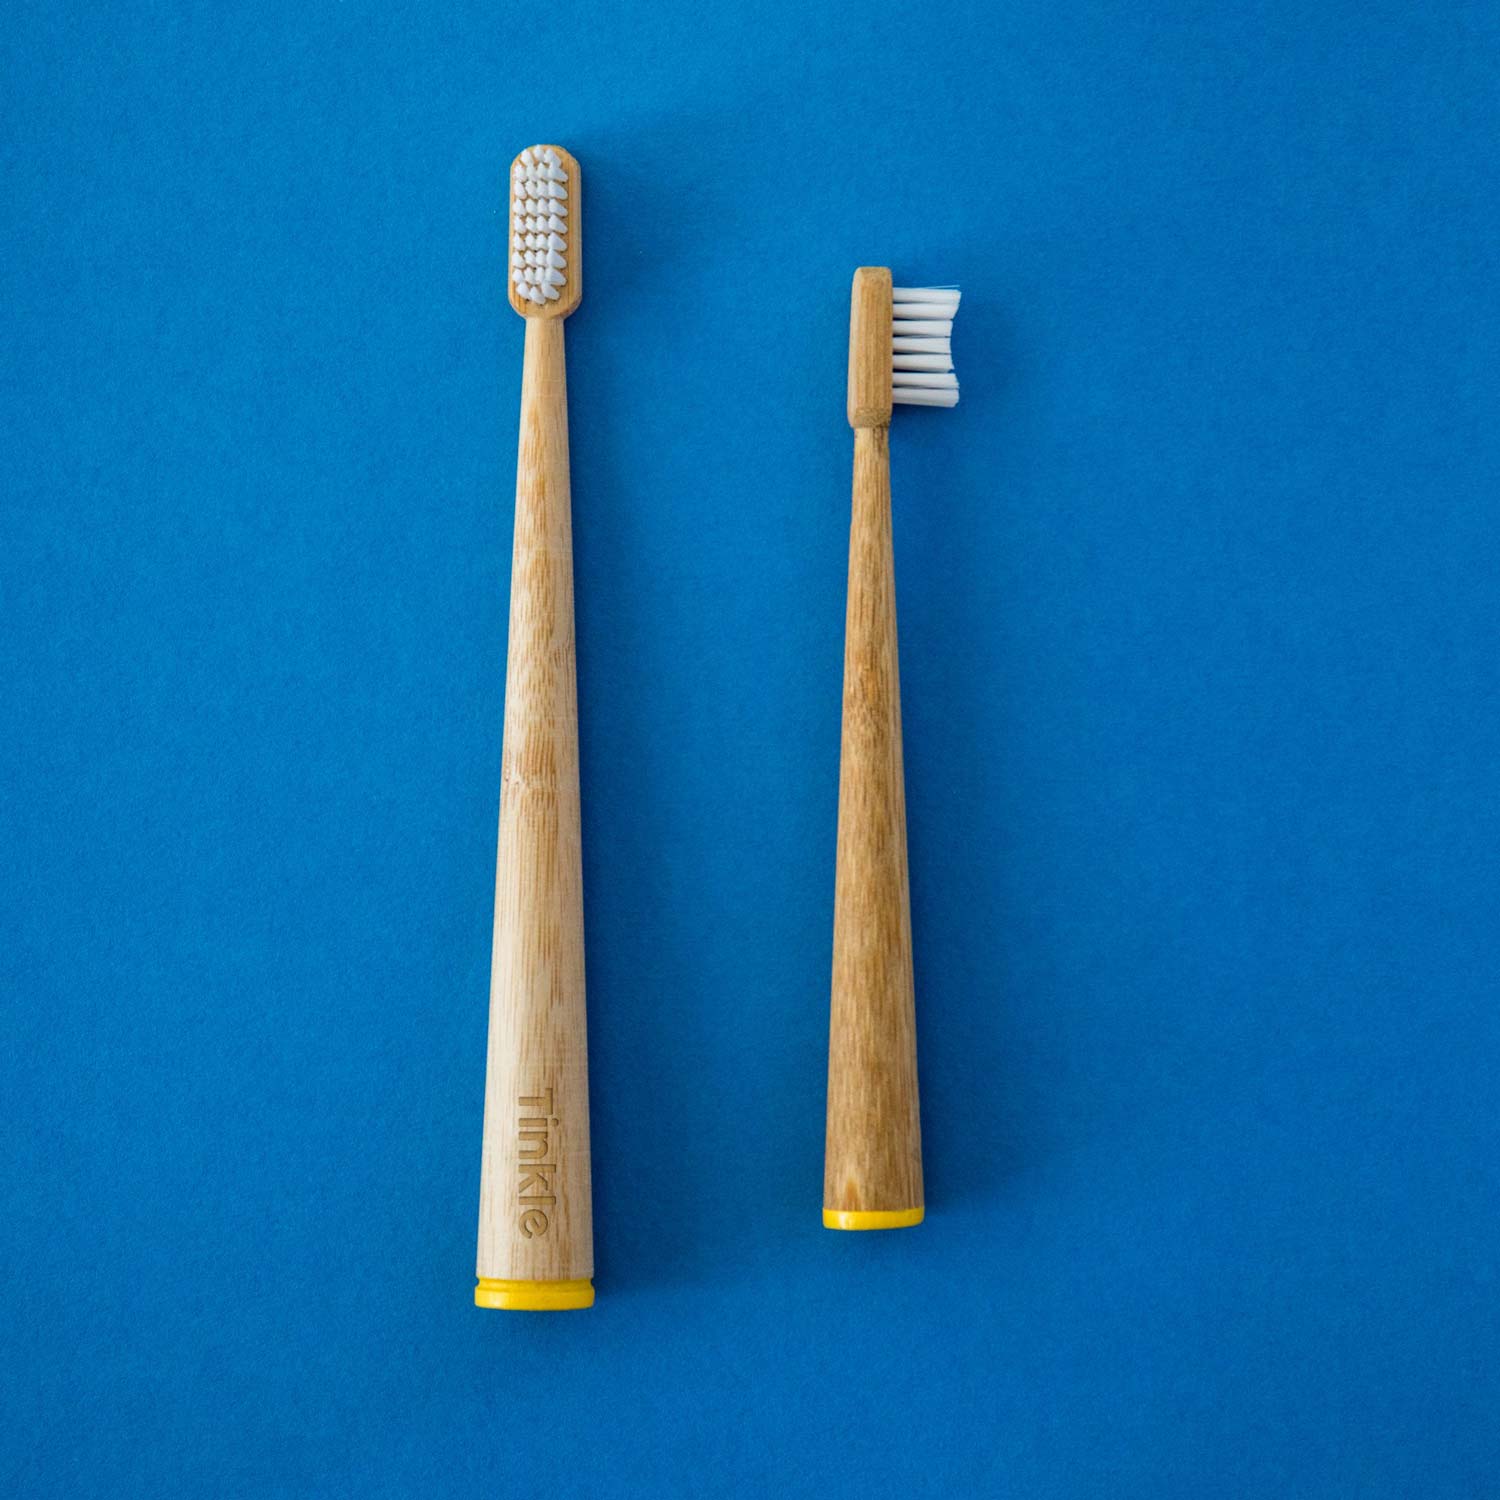 Tinkle bamboo toothbrush Australia